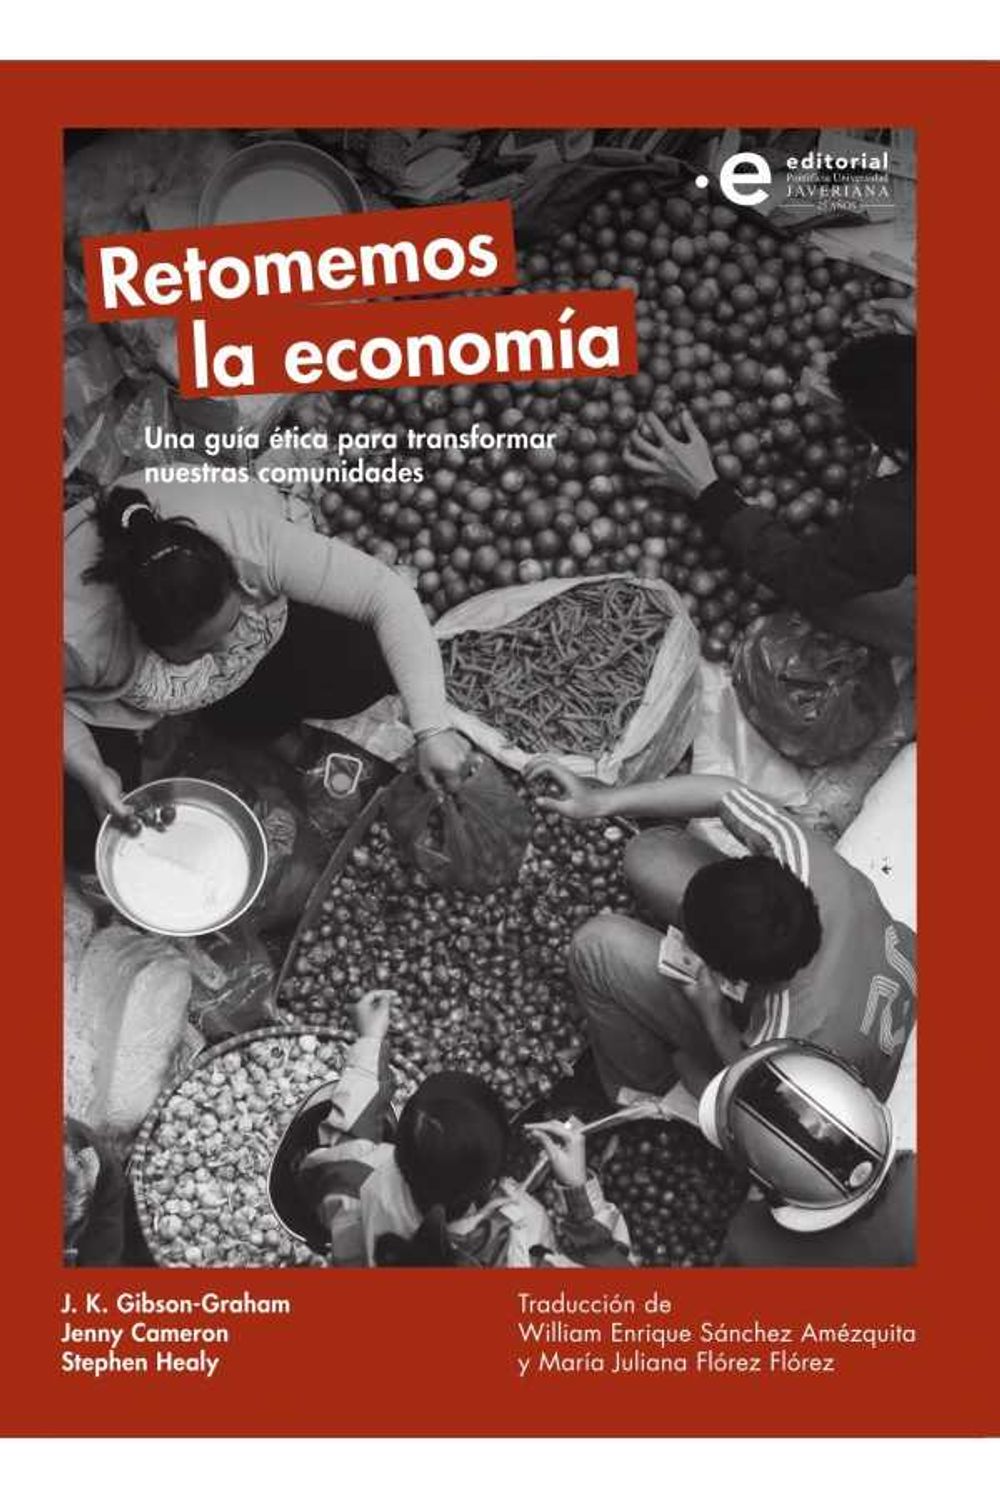 bw-retomemos-la-economiacutea-editorial-pontificia-universidad-javeriana-9789587810691